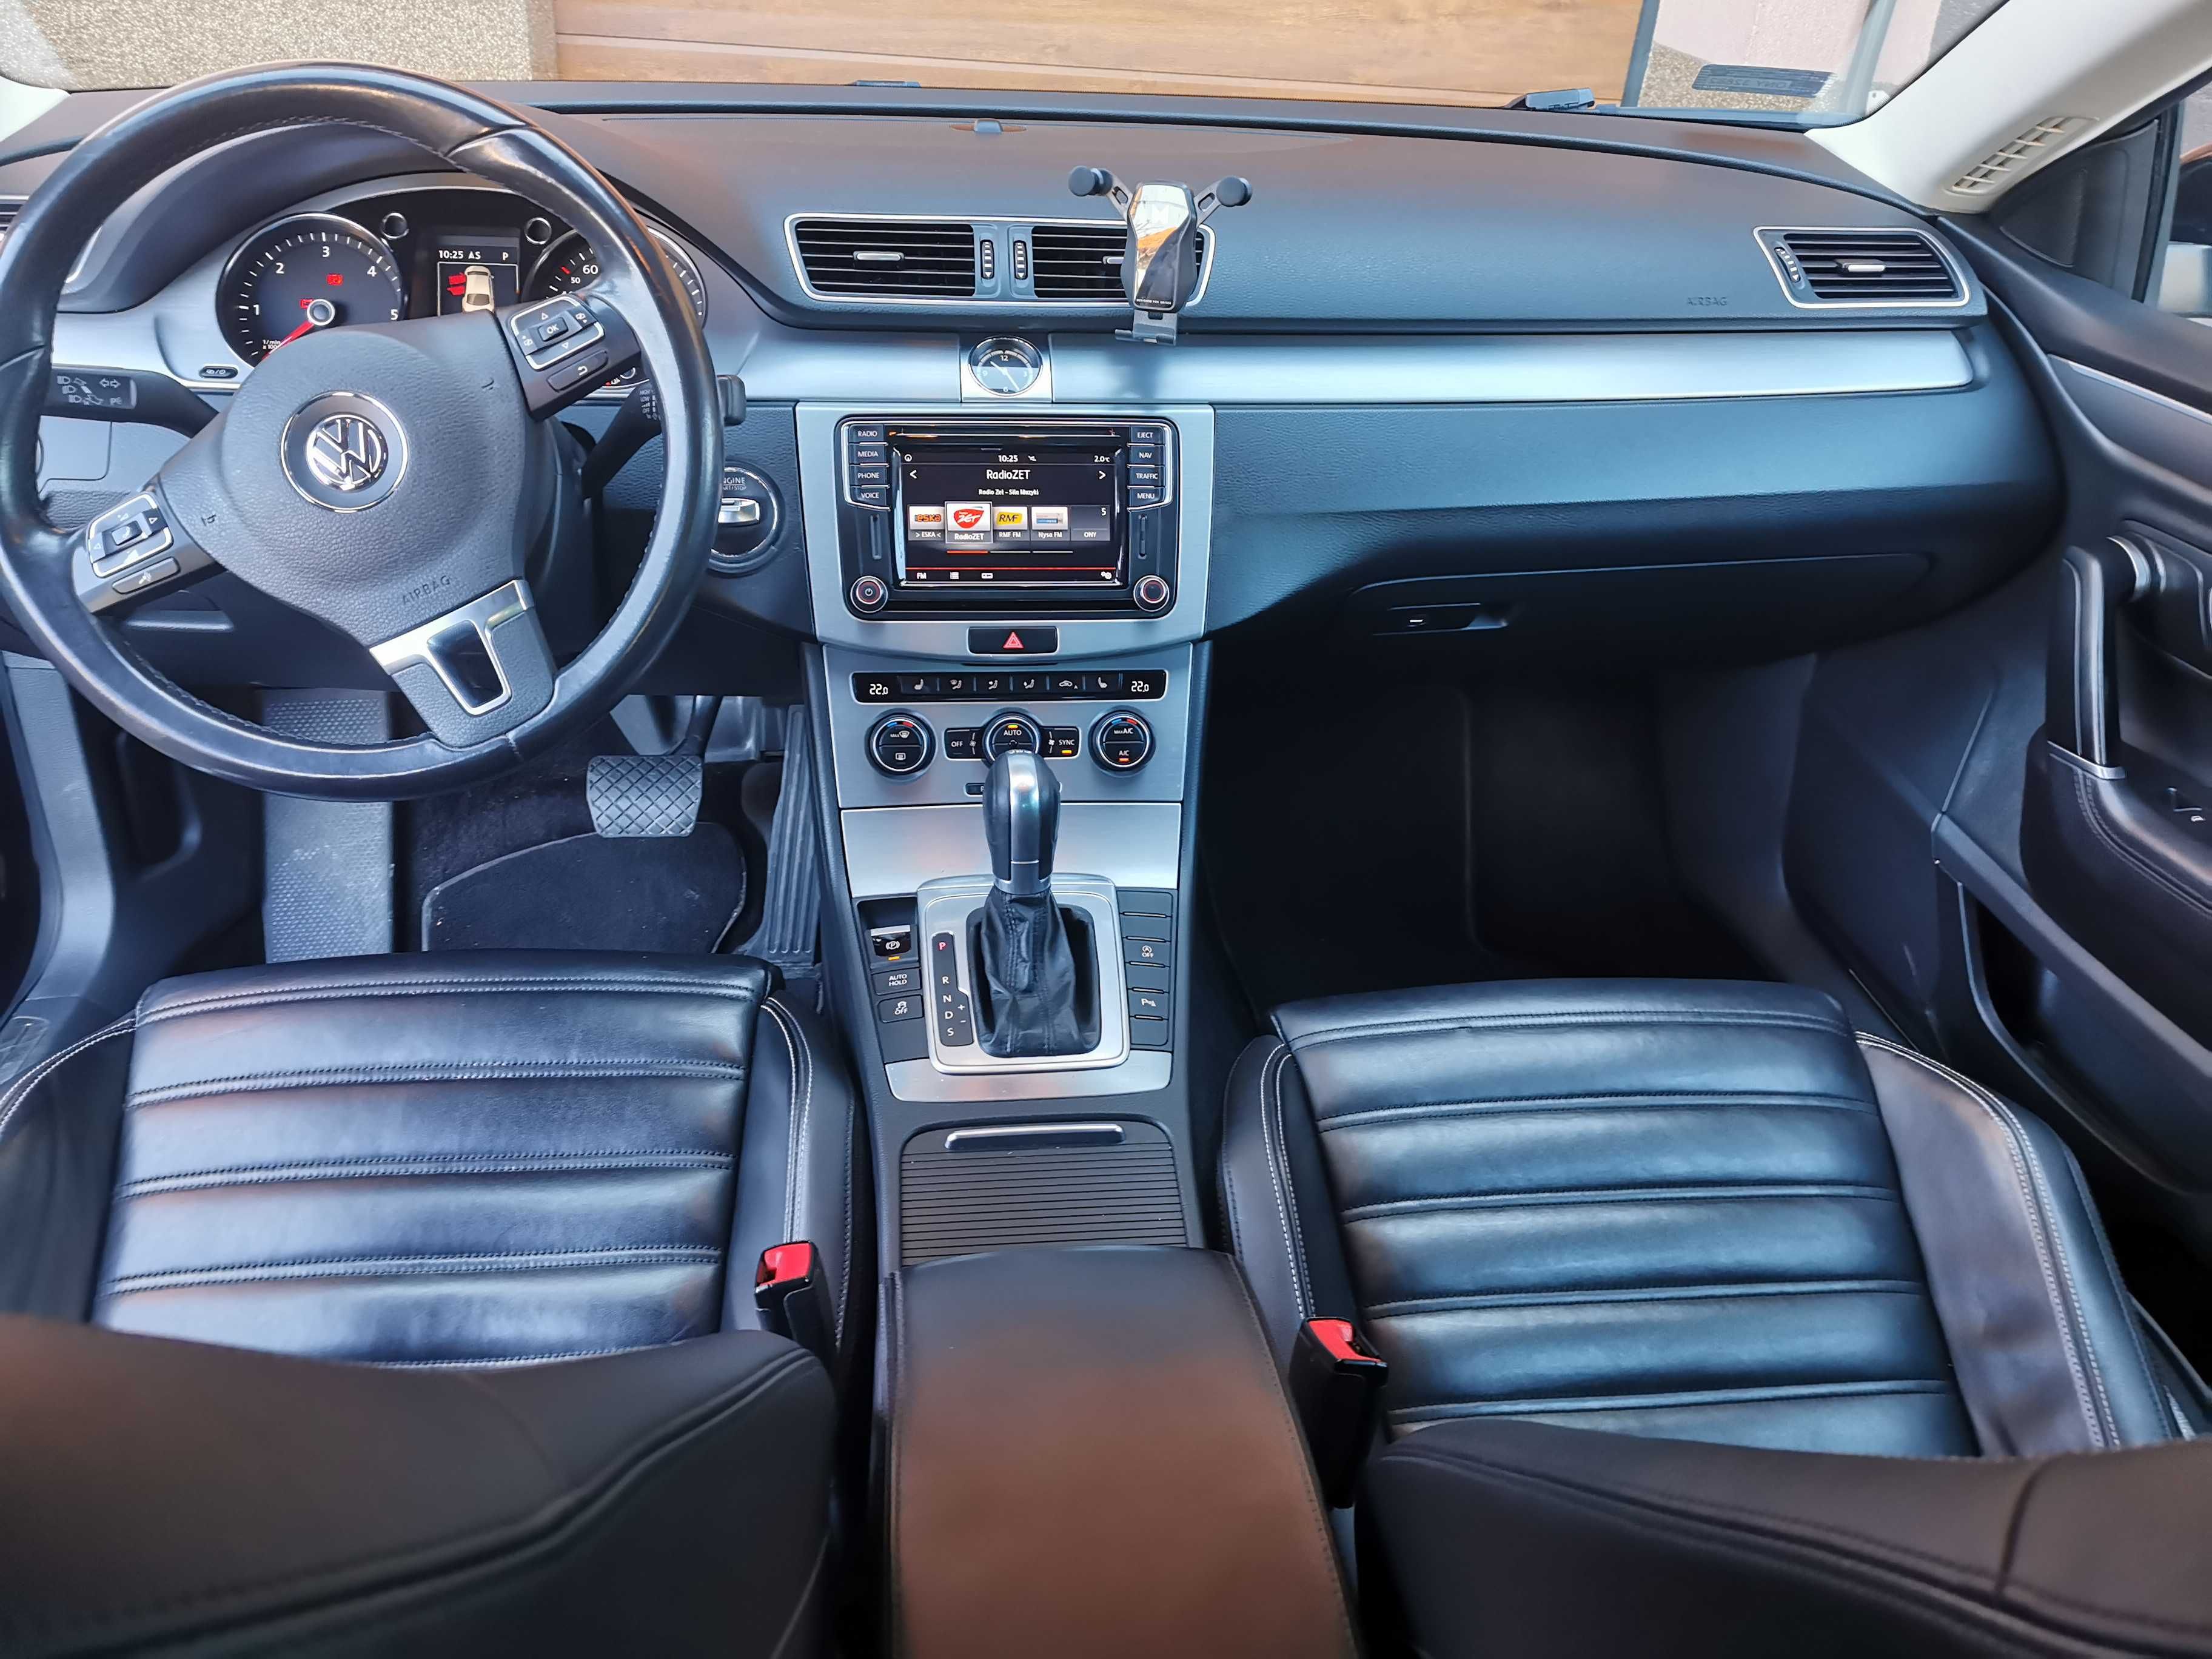 VW Volkswagen CC 2015 rok, 2.0 Blue TDI DSG automat, skóra